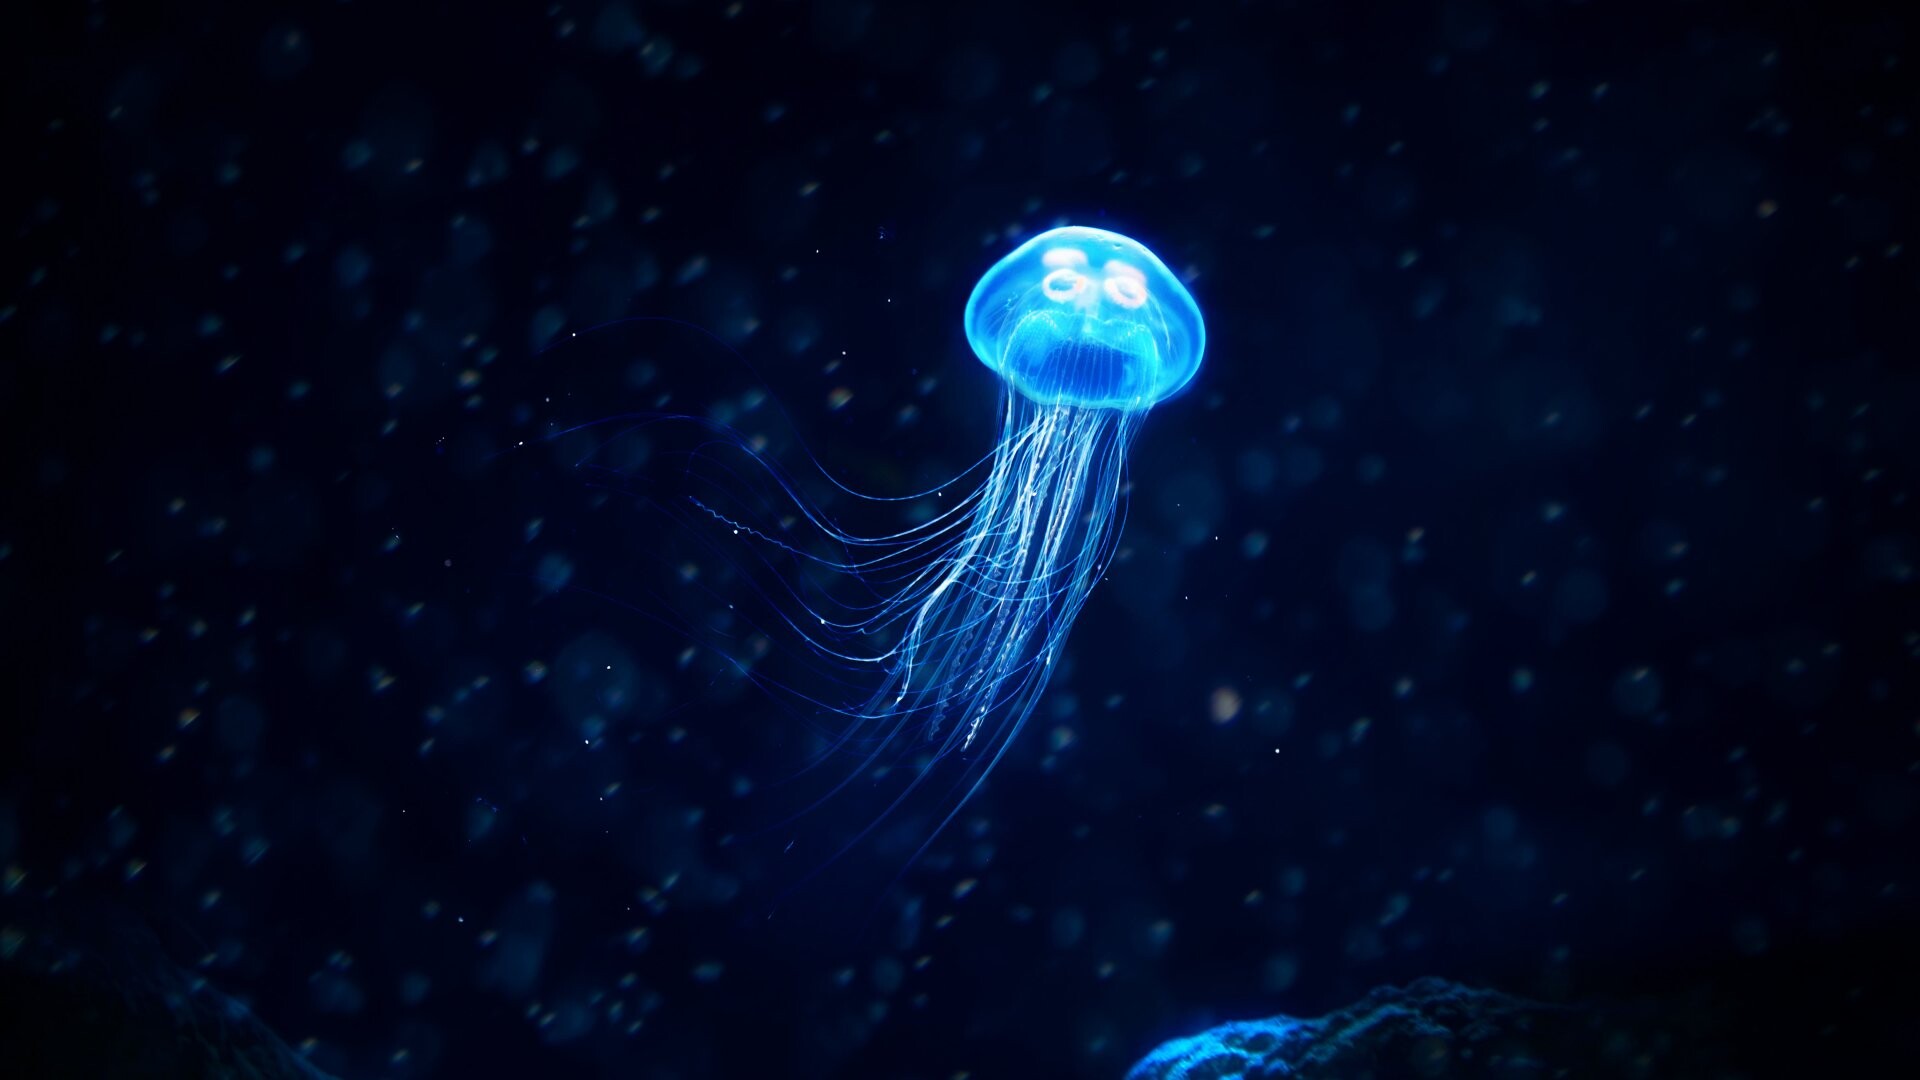 Glowing Jellyfish: Glowing free-swimming marine animal, Umbrella-shaped bells and trailing tentacles. 1920x1080 Full HD Background.